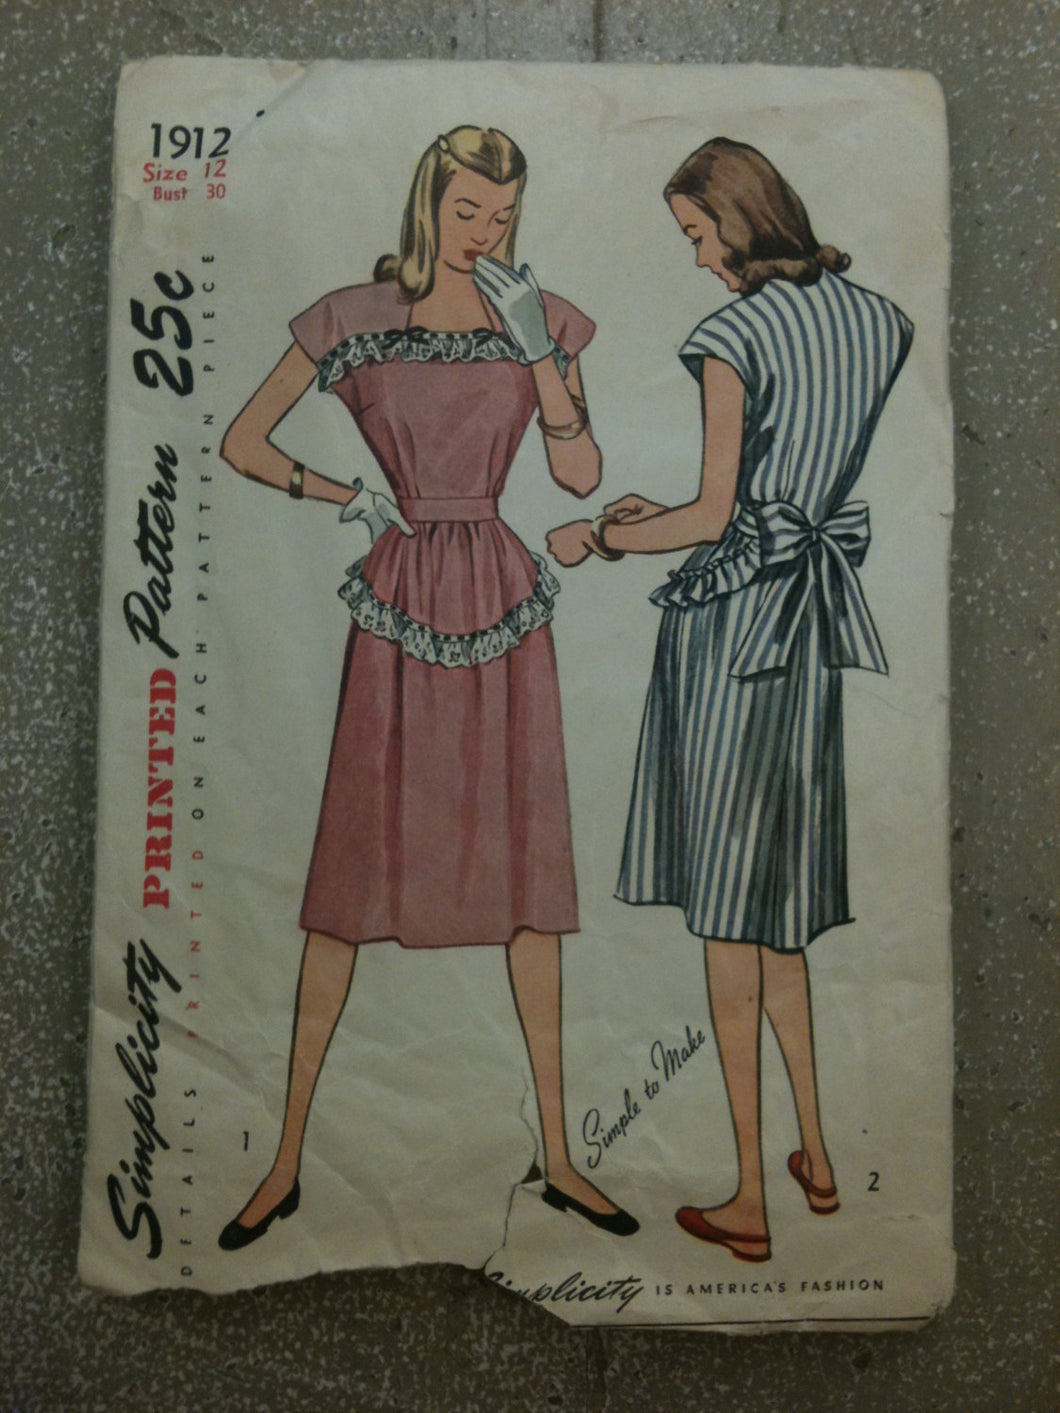 1940s Dress Pattern / Vintage Sewing Pattern for Women / Simplicity 1912 / Size 12 Bust 30 / Peplum Dress / Simplicity Pattern / Tie Back